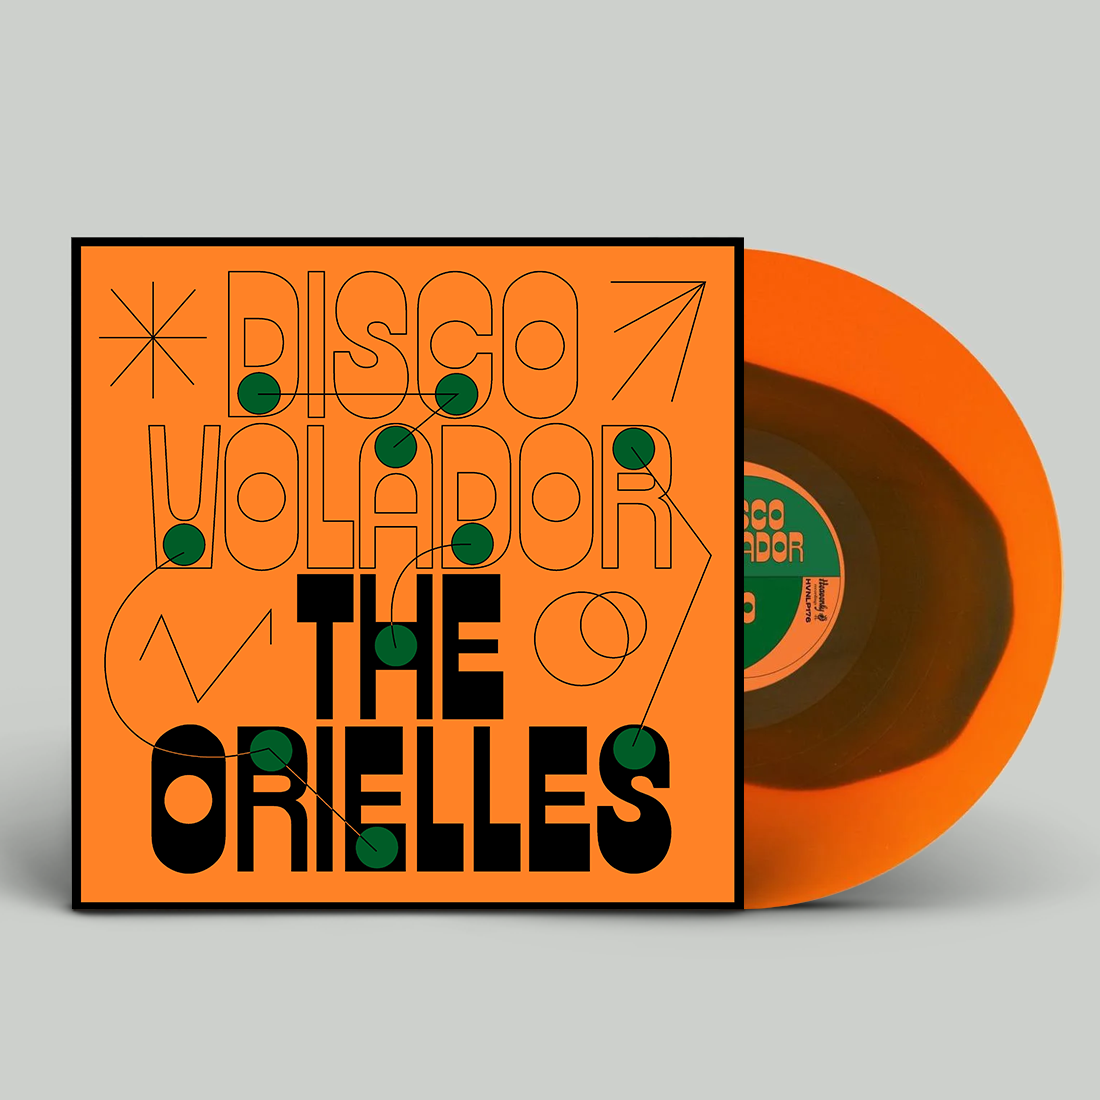 Disco Volador: Limited Edition Orange with Green Blob Vinyl LP